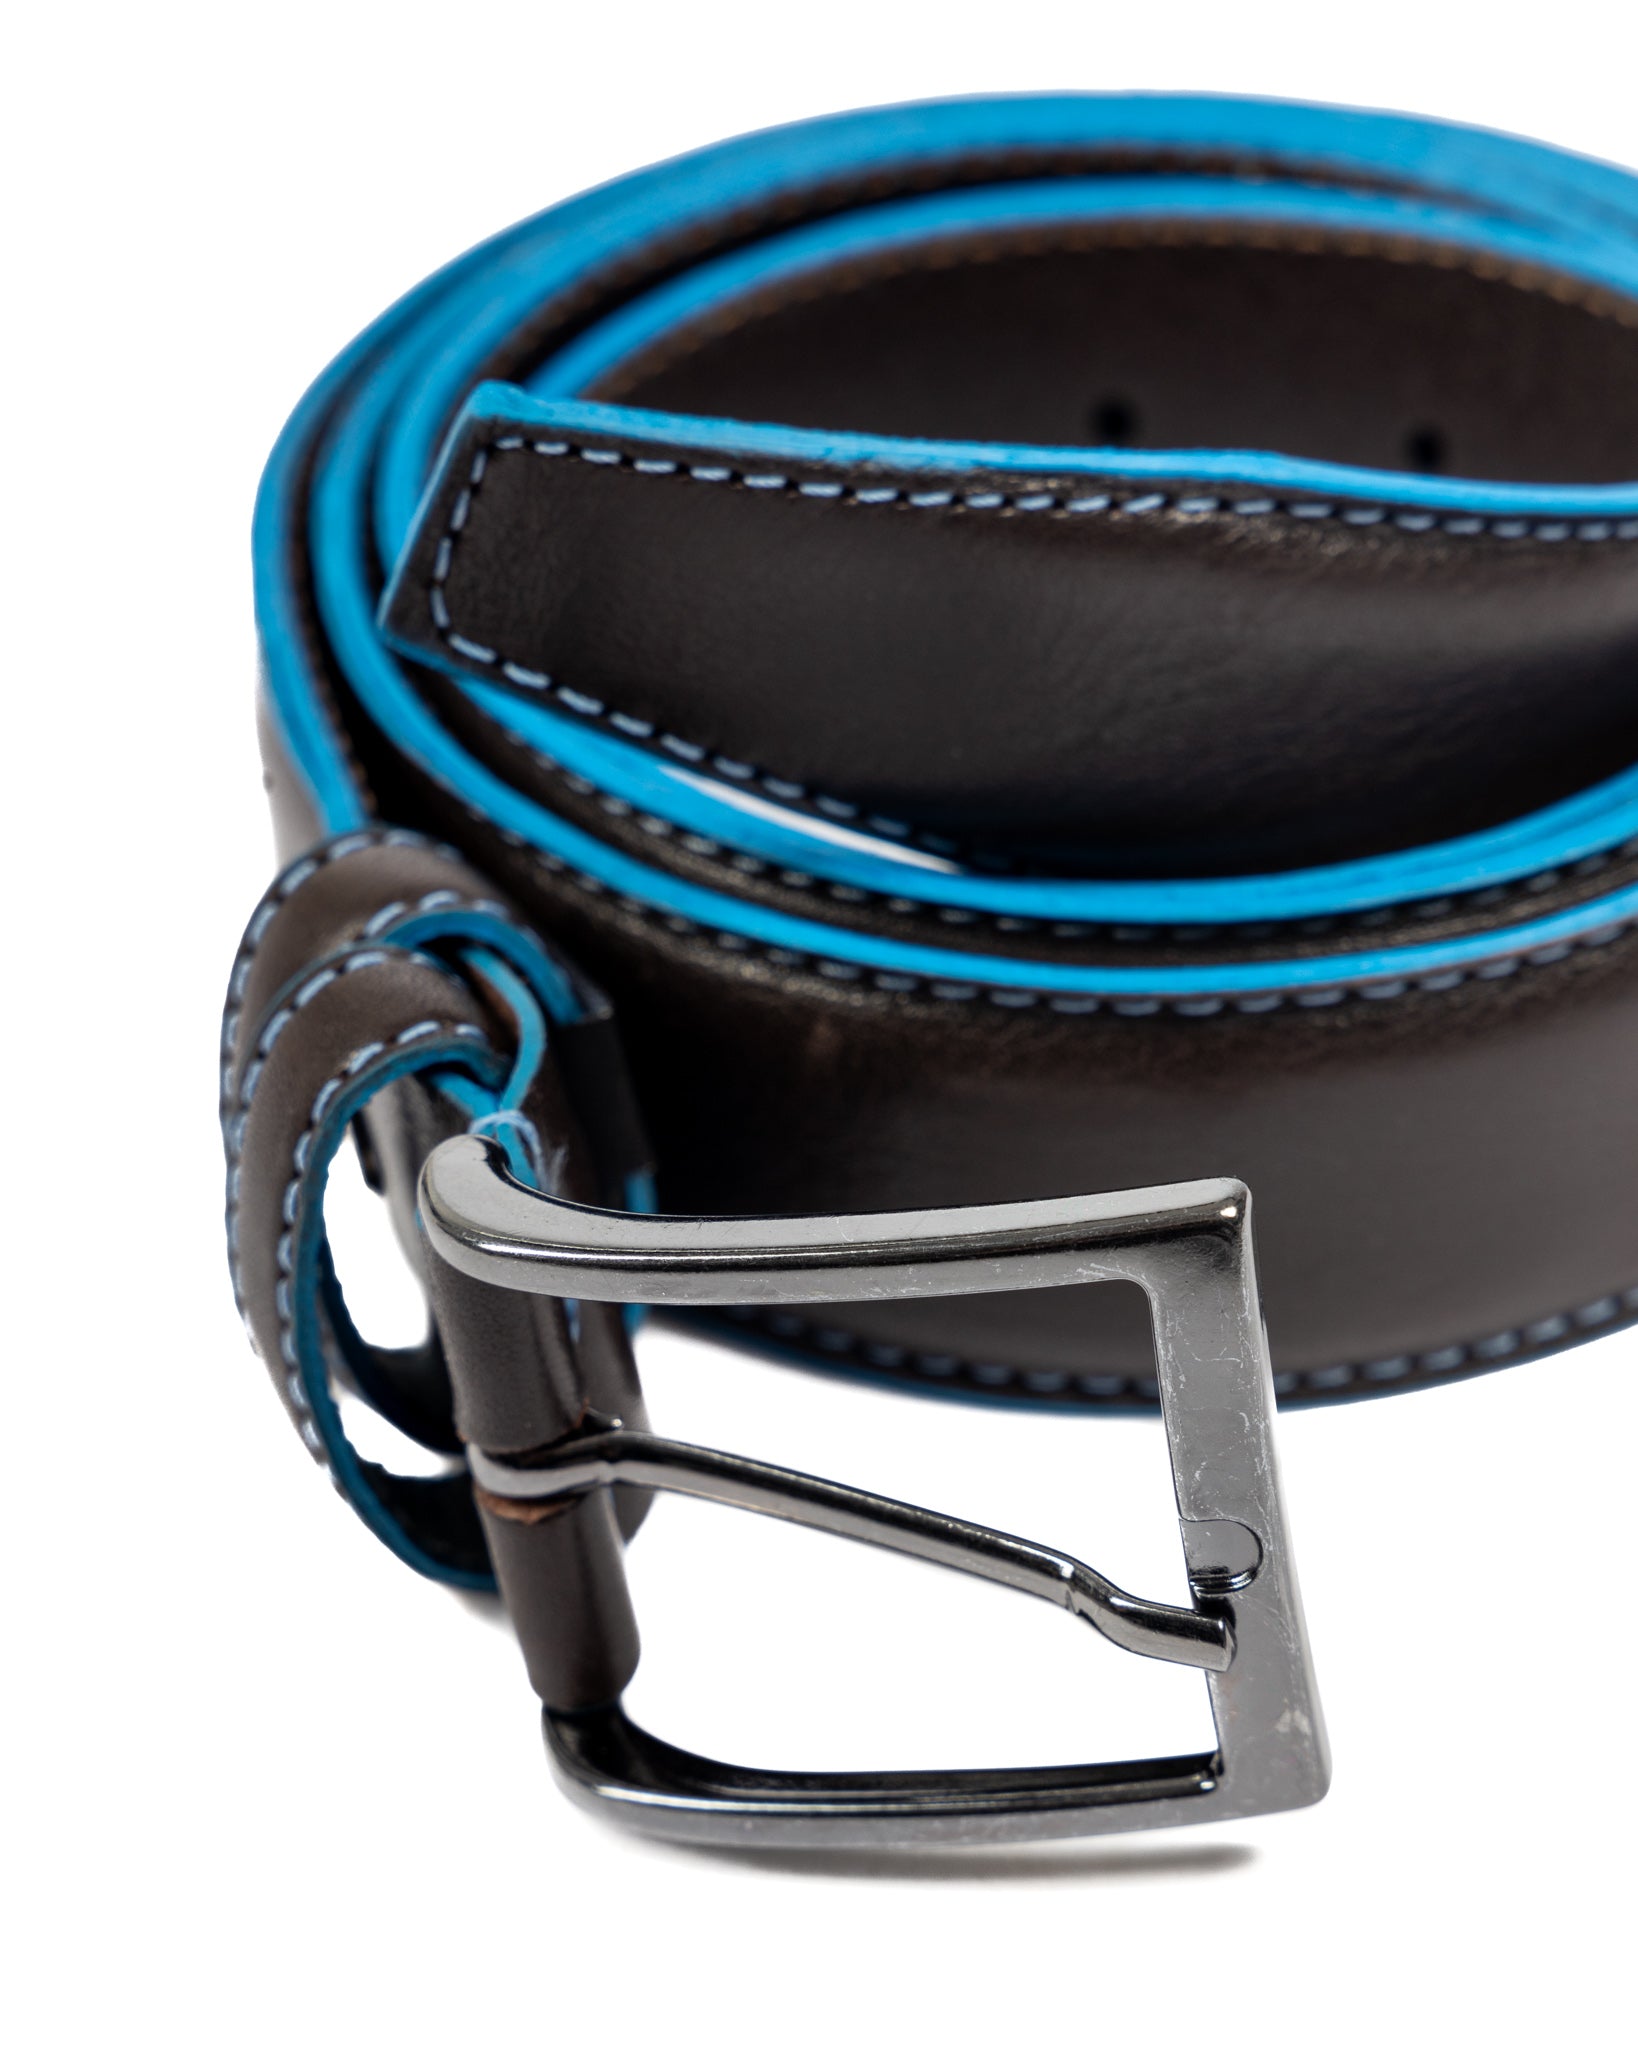 Pienza - dark brown leather belt with contrasting stitching